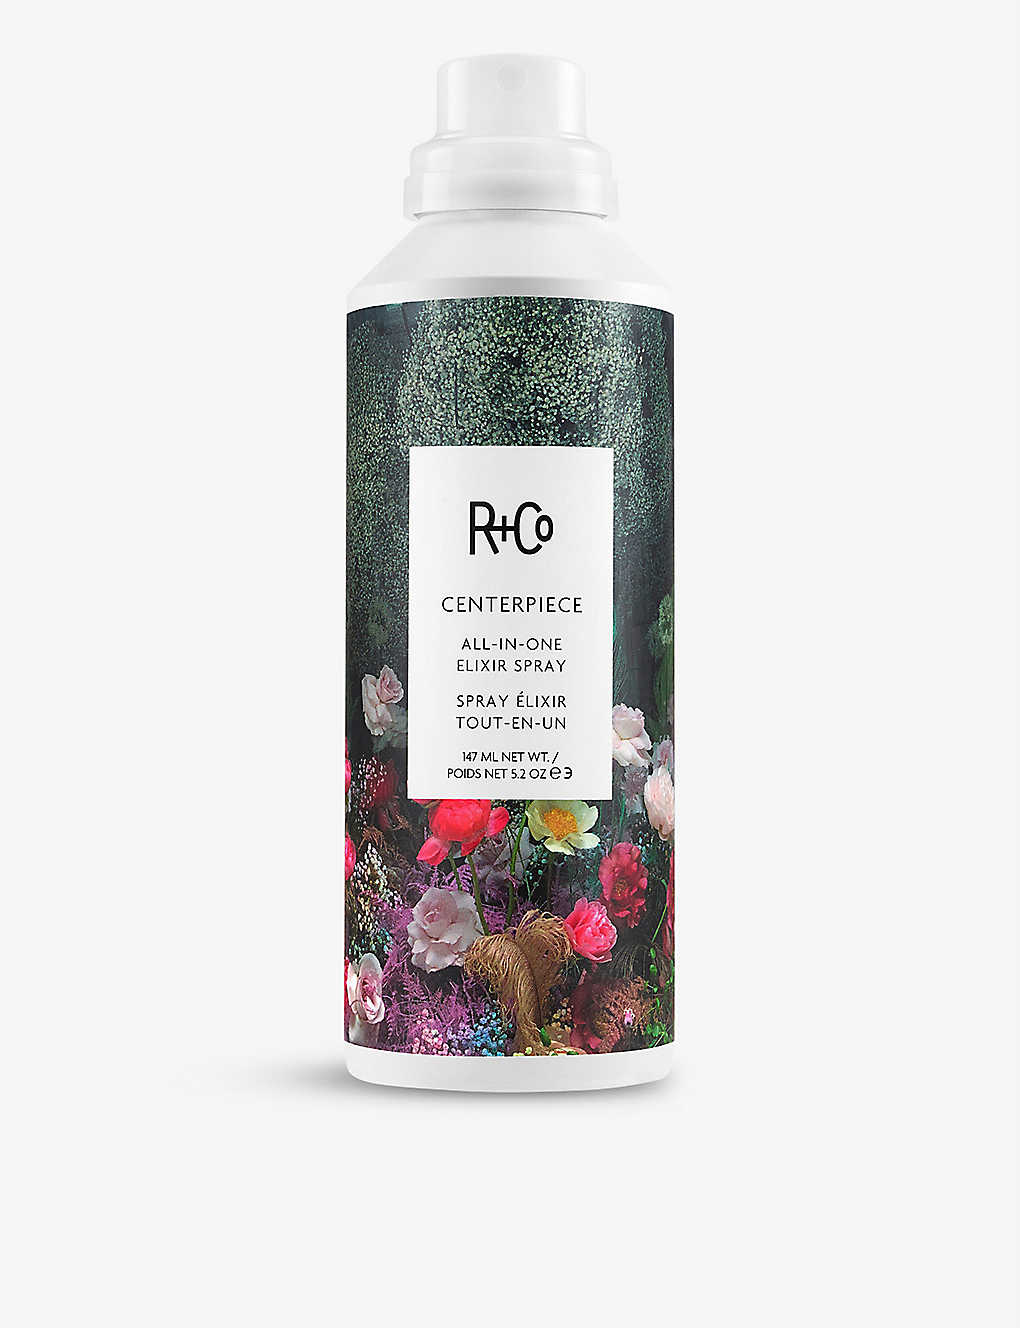 R + Co Centrepiece All-in-one Elixir Spray 147ml